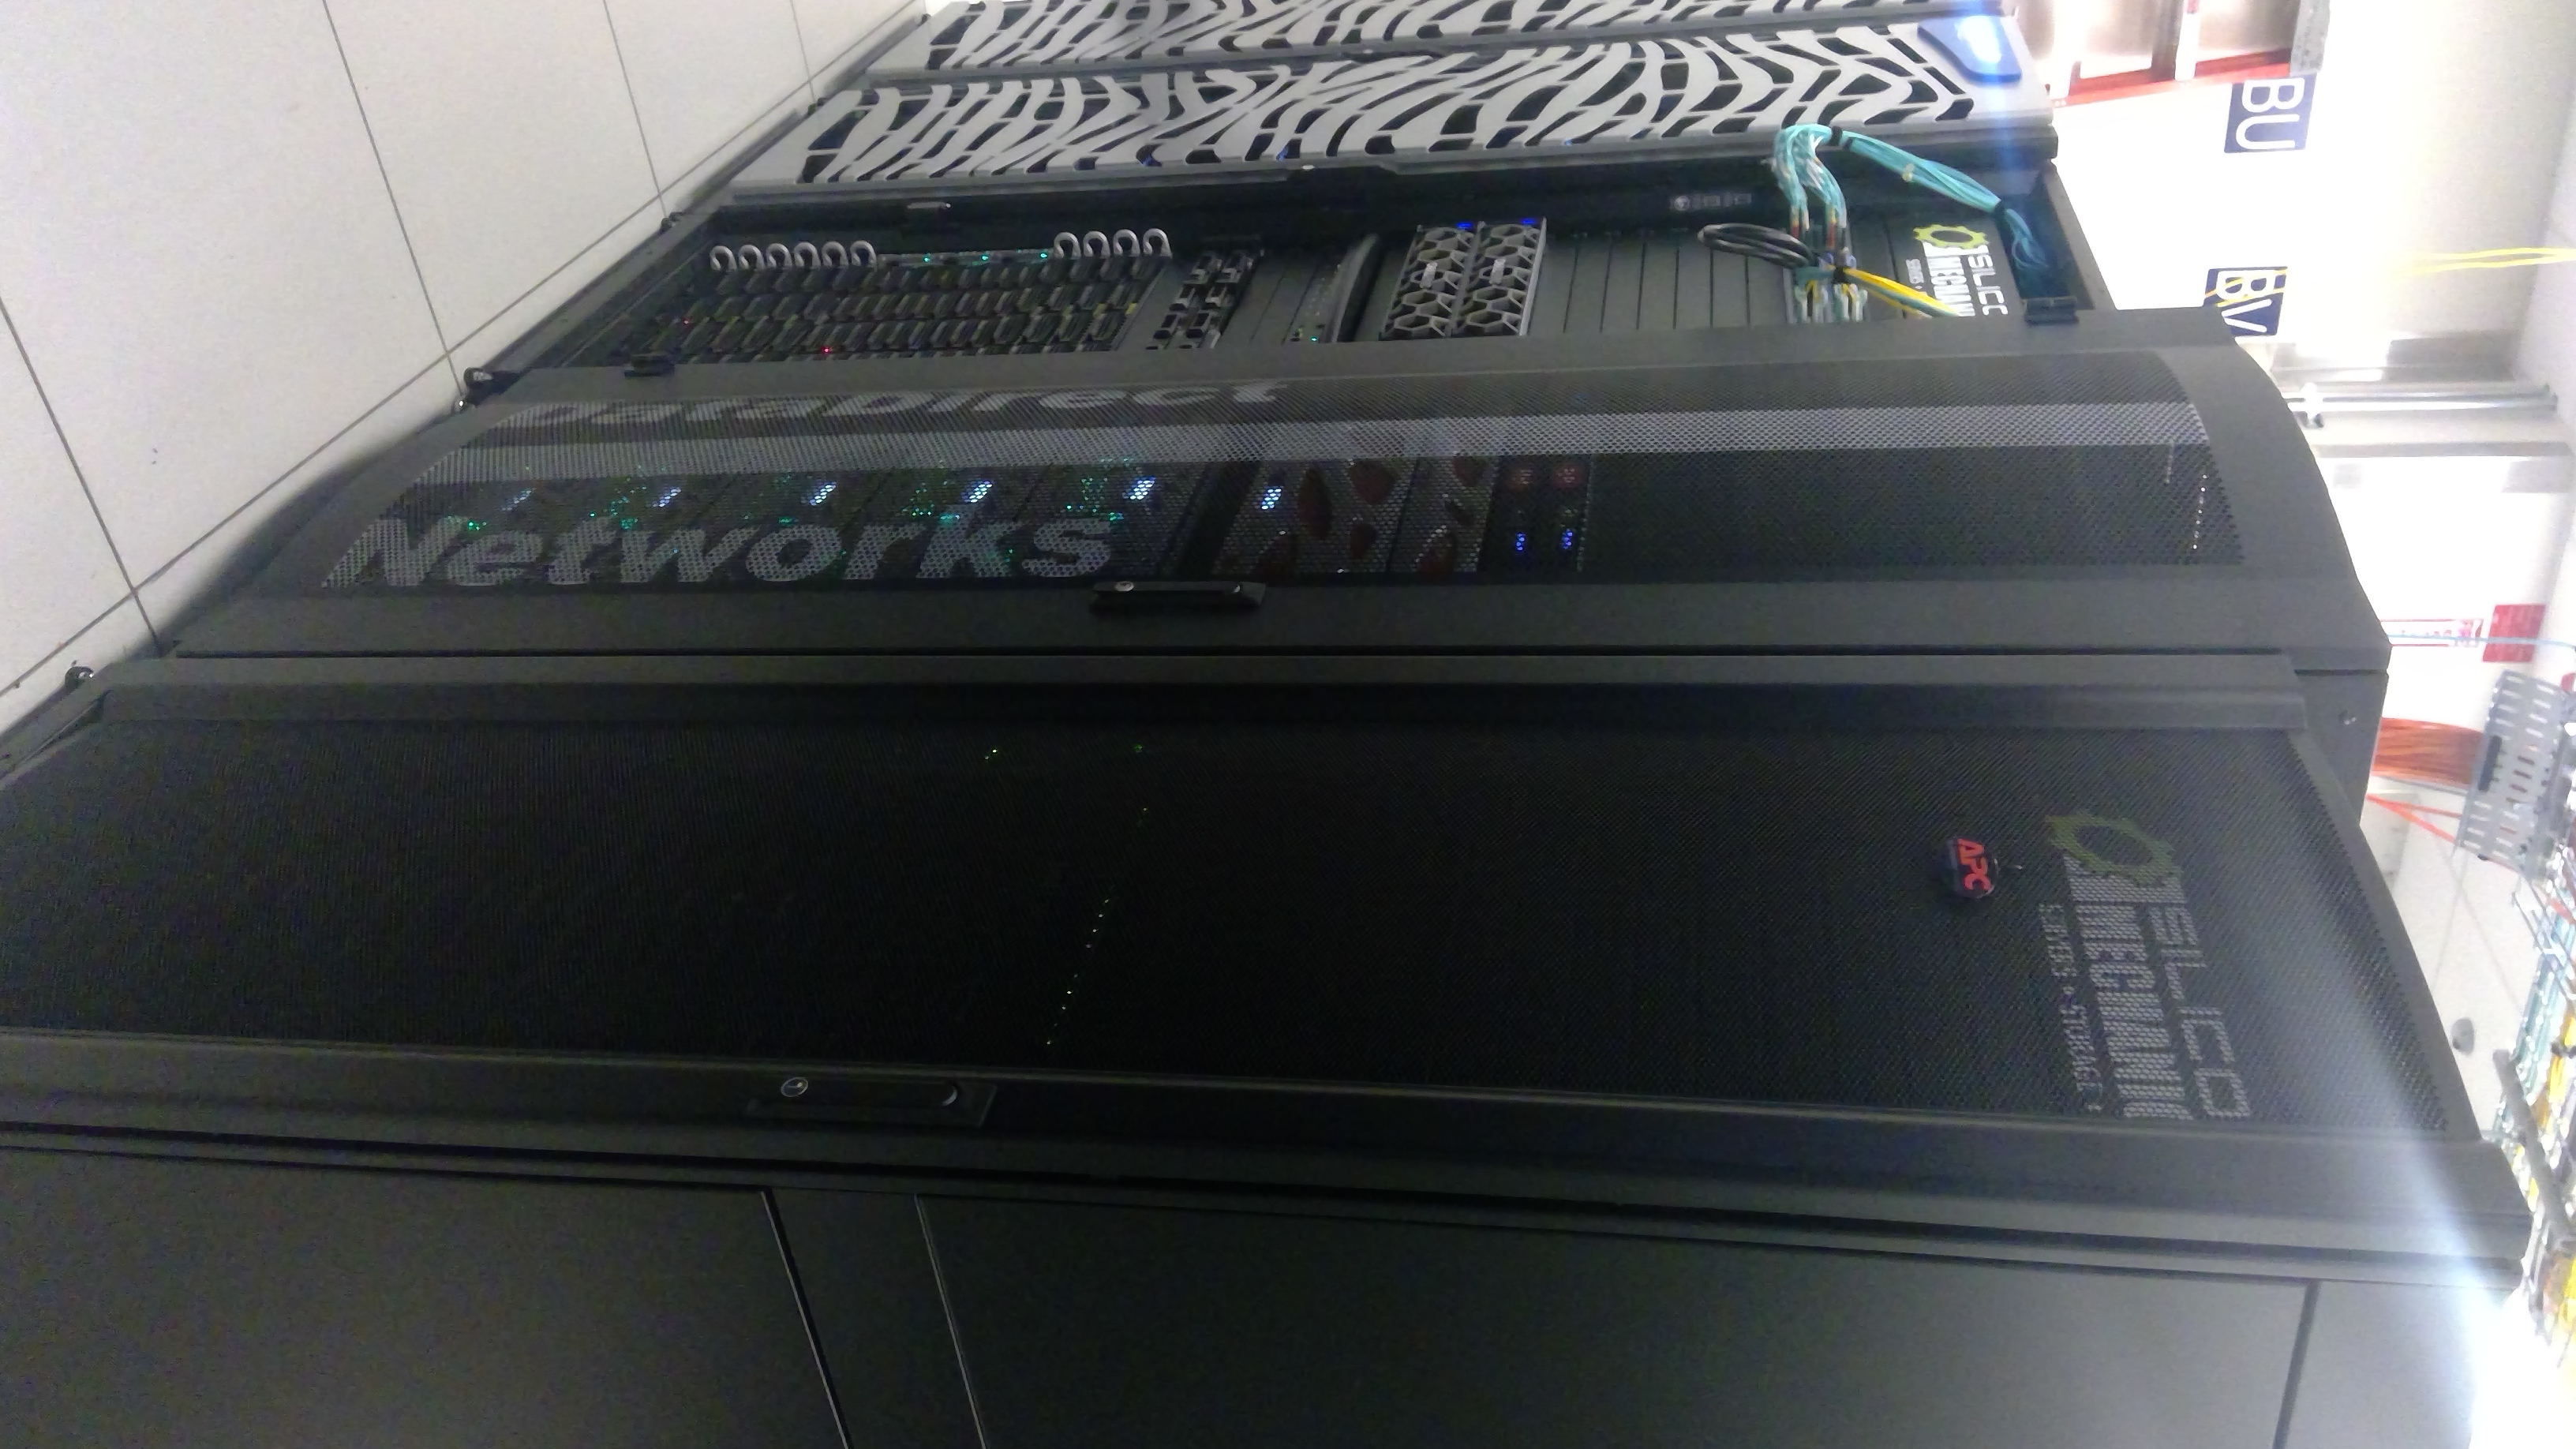 Photo of the Niagara supercomputer